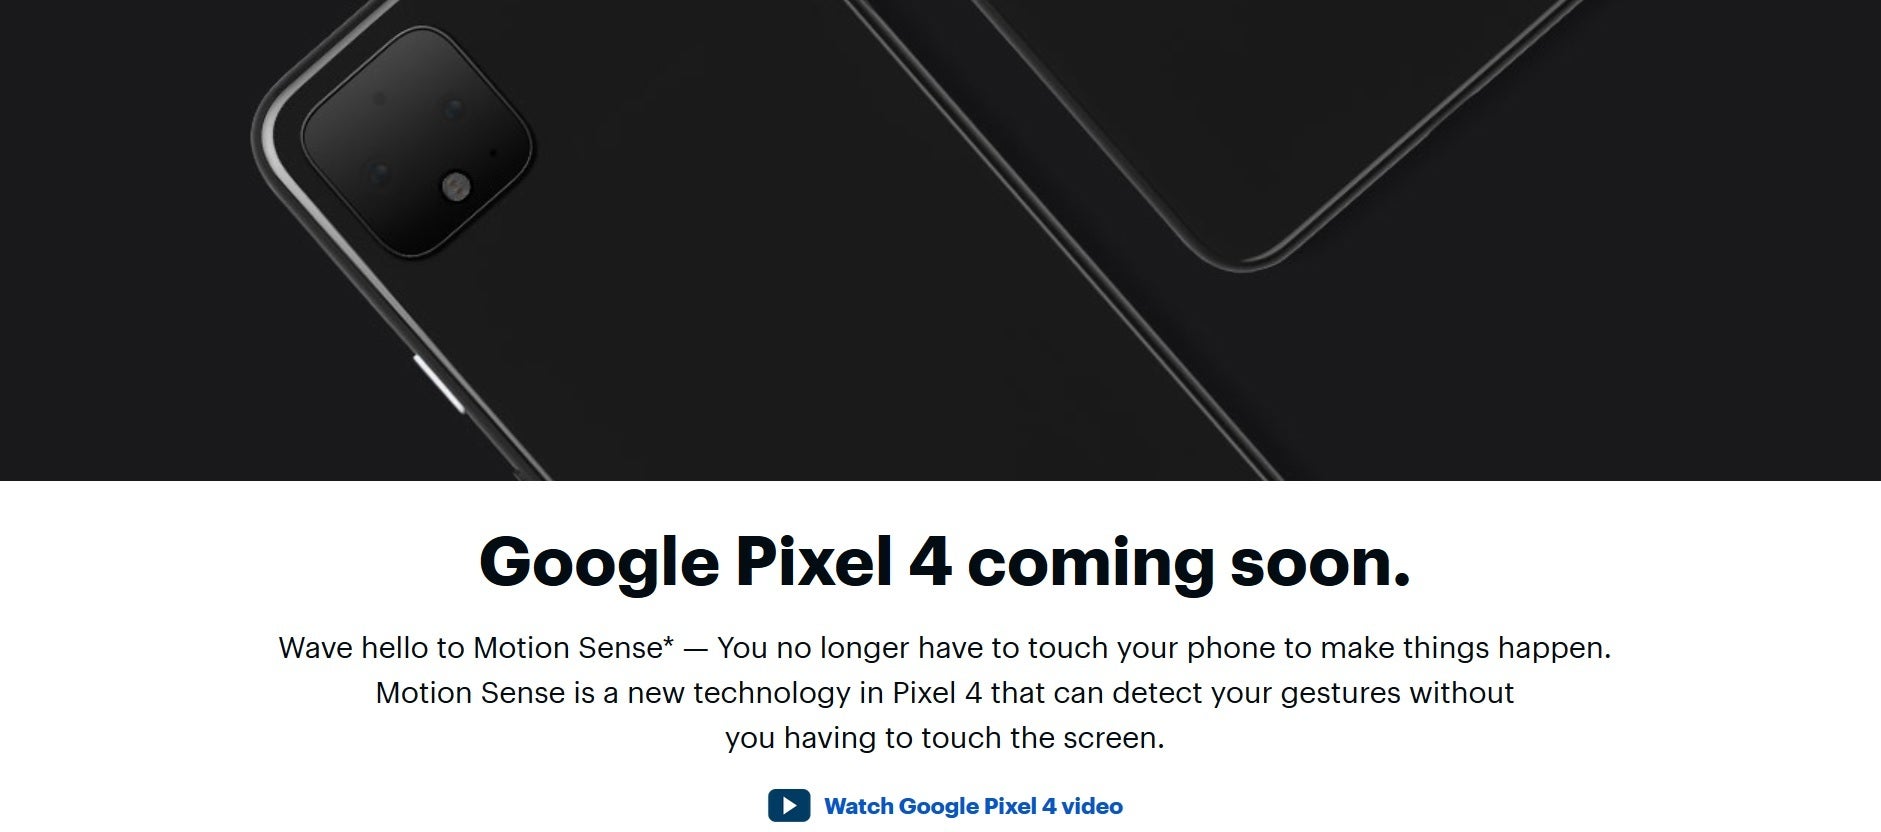 Best Buy teases the upcoming Google Pixel 4 line - Best Buy starts plugging the upcoming Google Pixel 4 series